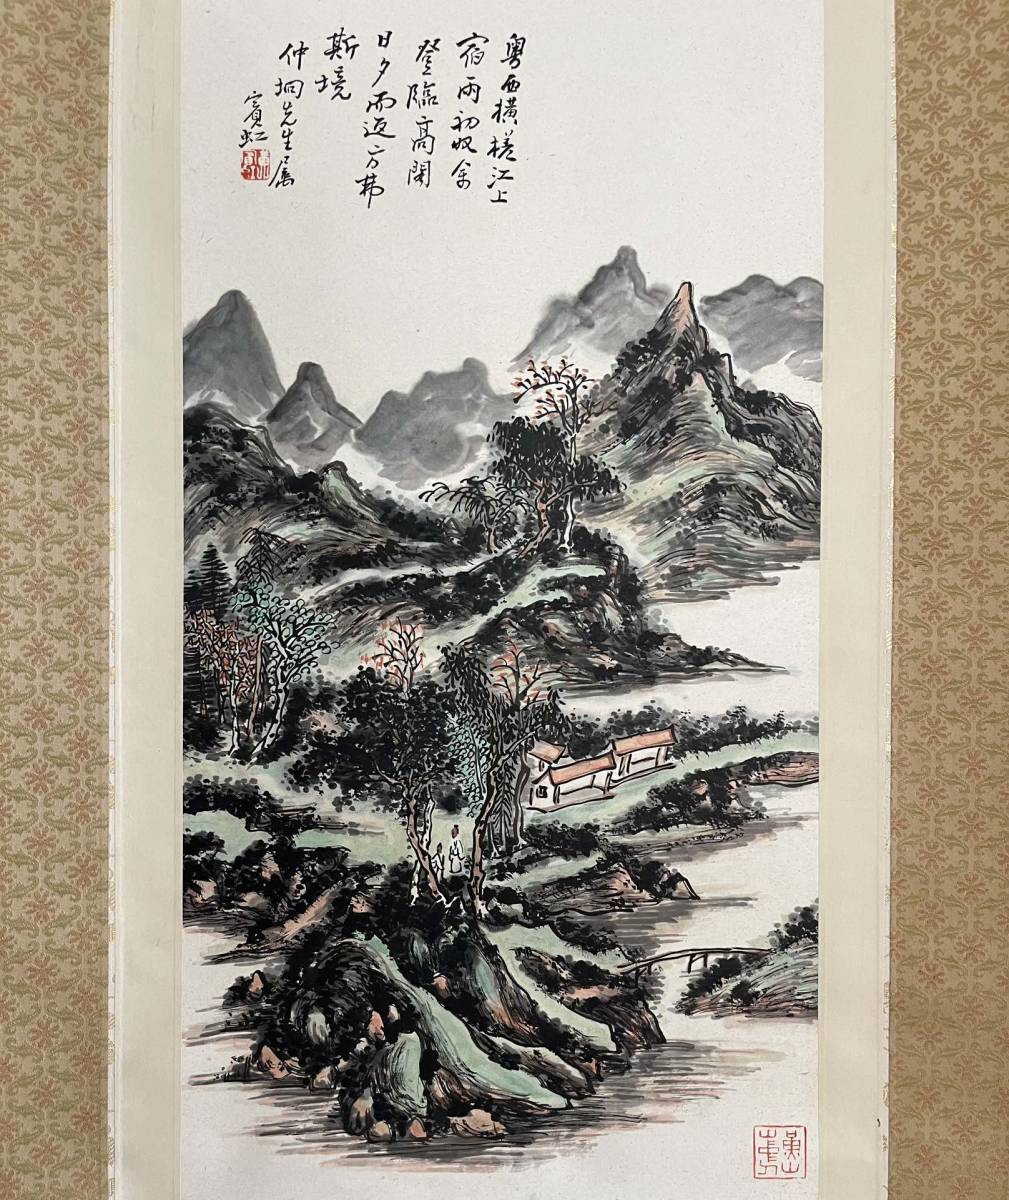 ZW0000780 中国画古美術黄賓虹山水図掛け軸真筆逸品肉筆保証中心尺寸